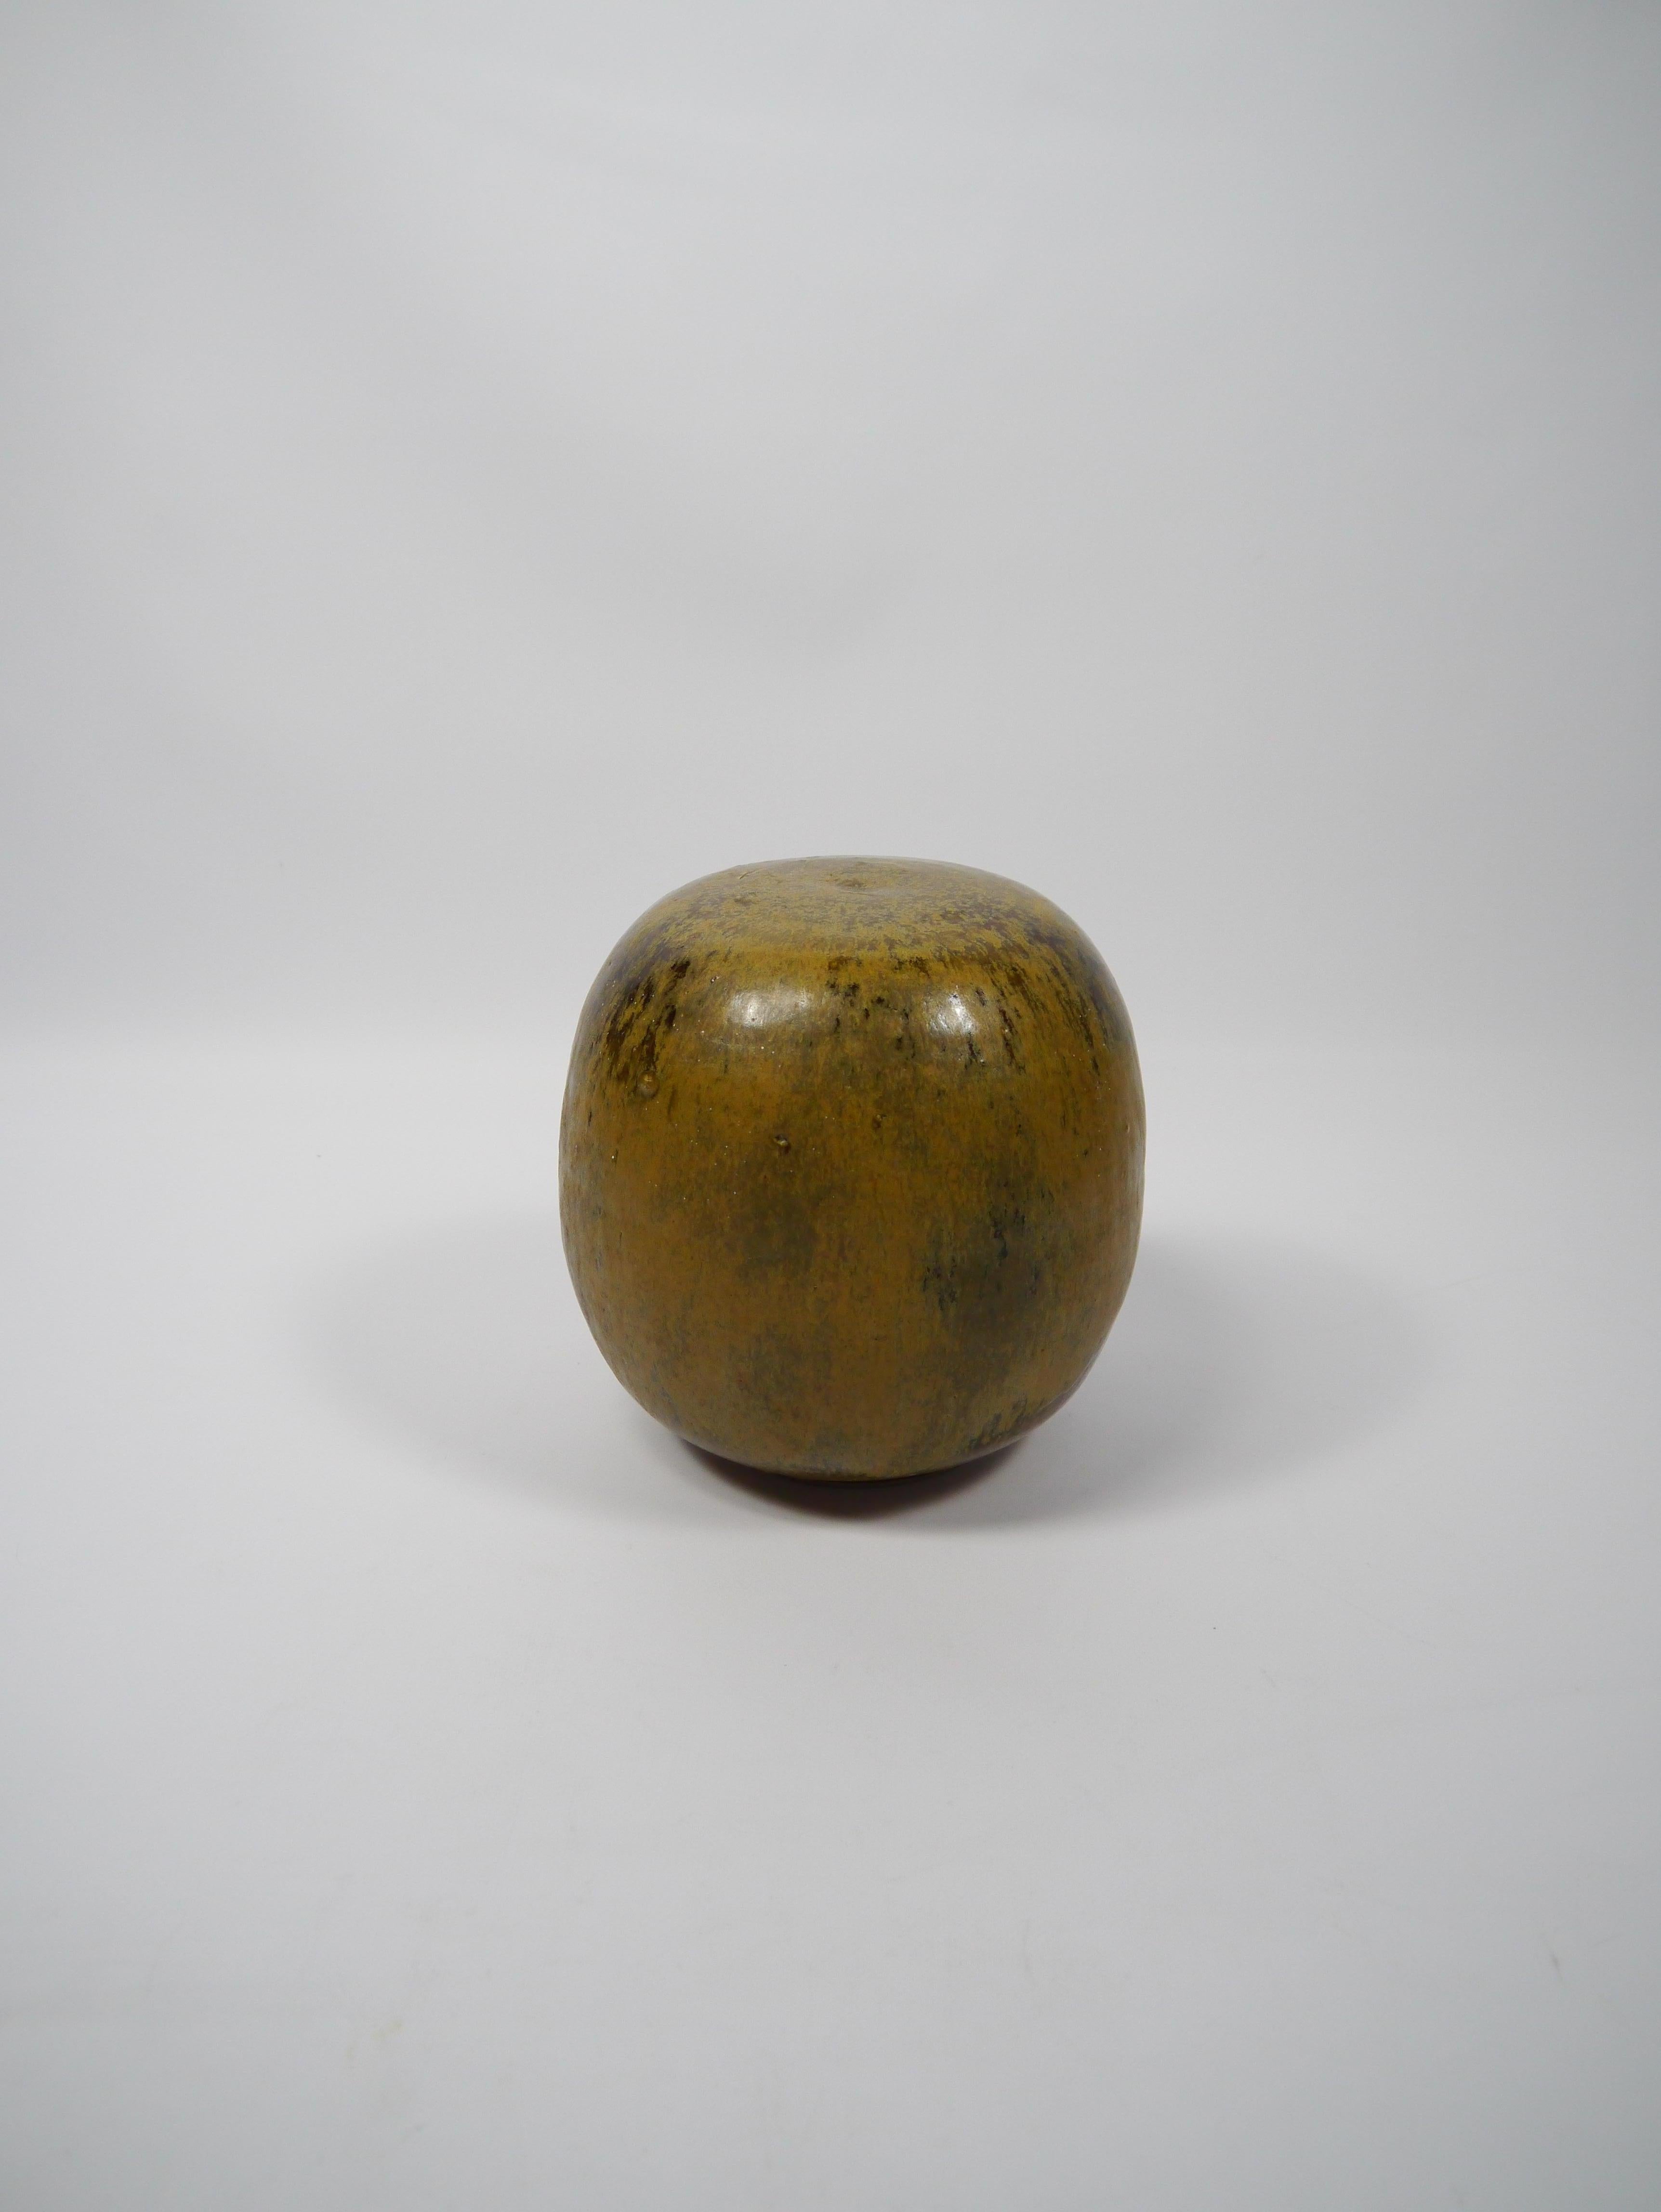 Minimalist acorn-shaped glazed ceramic sculpture made by Norwegian artist Kåre Mjøs in 1972. Expressive in all its simplicity.